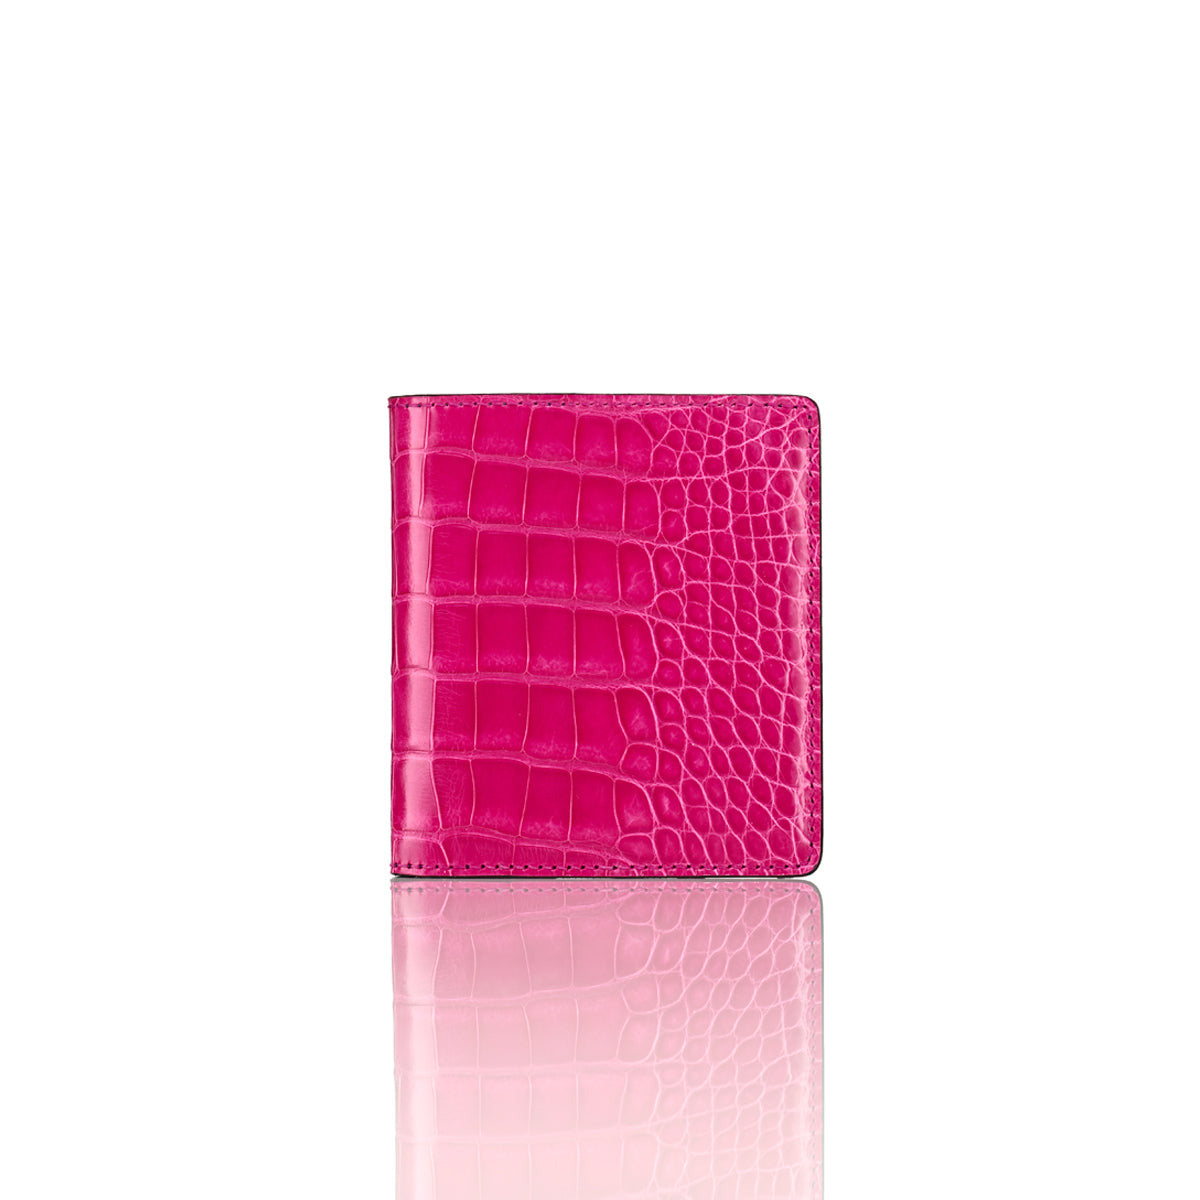 STALVEY Bi-Fold Wallet in Pink Alligator